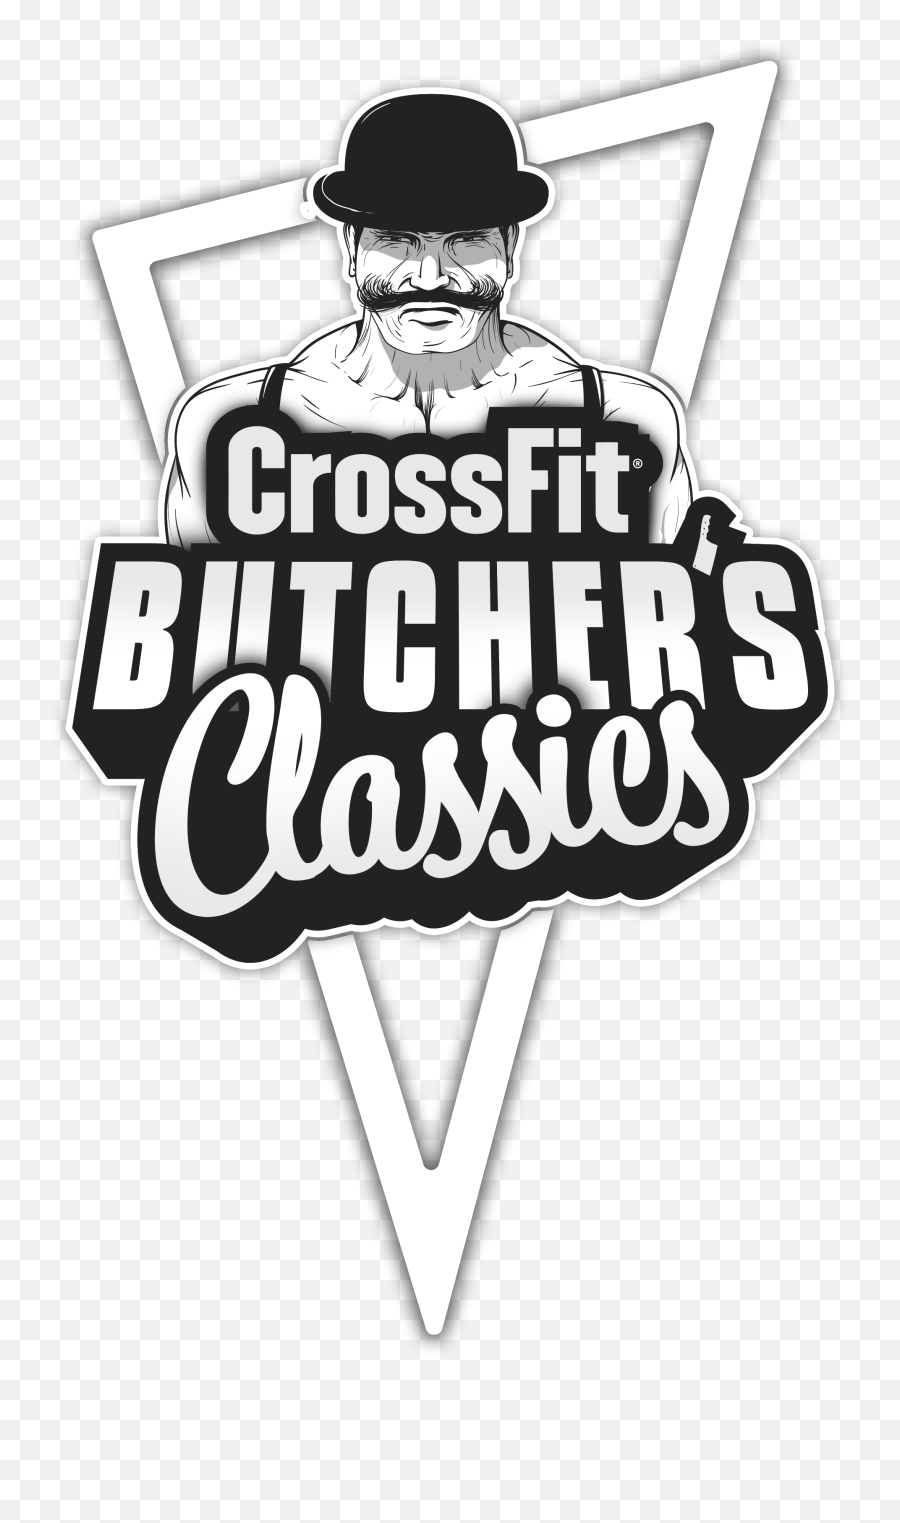 Crossfit Butchers Classics Emoji,Butcher Logo